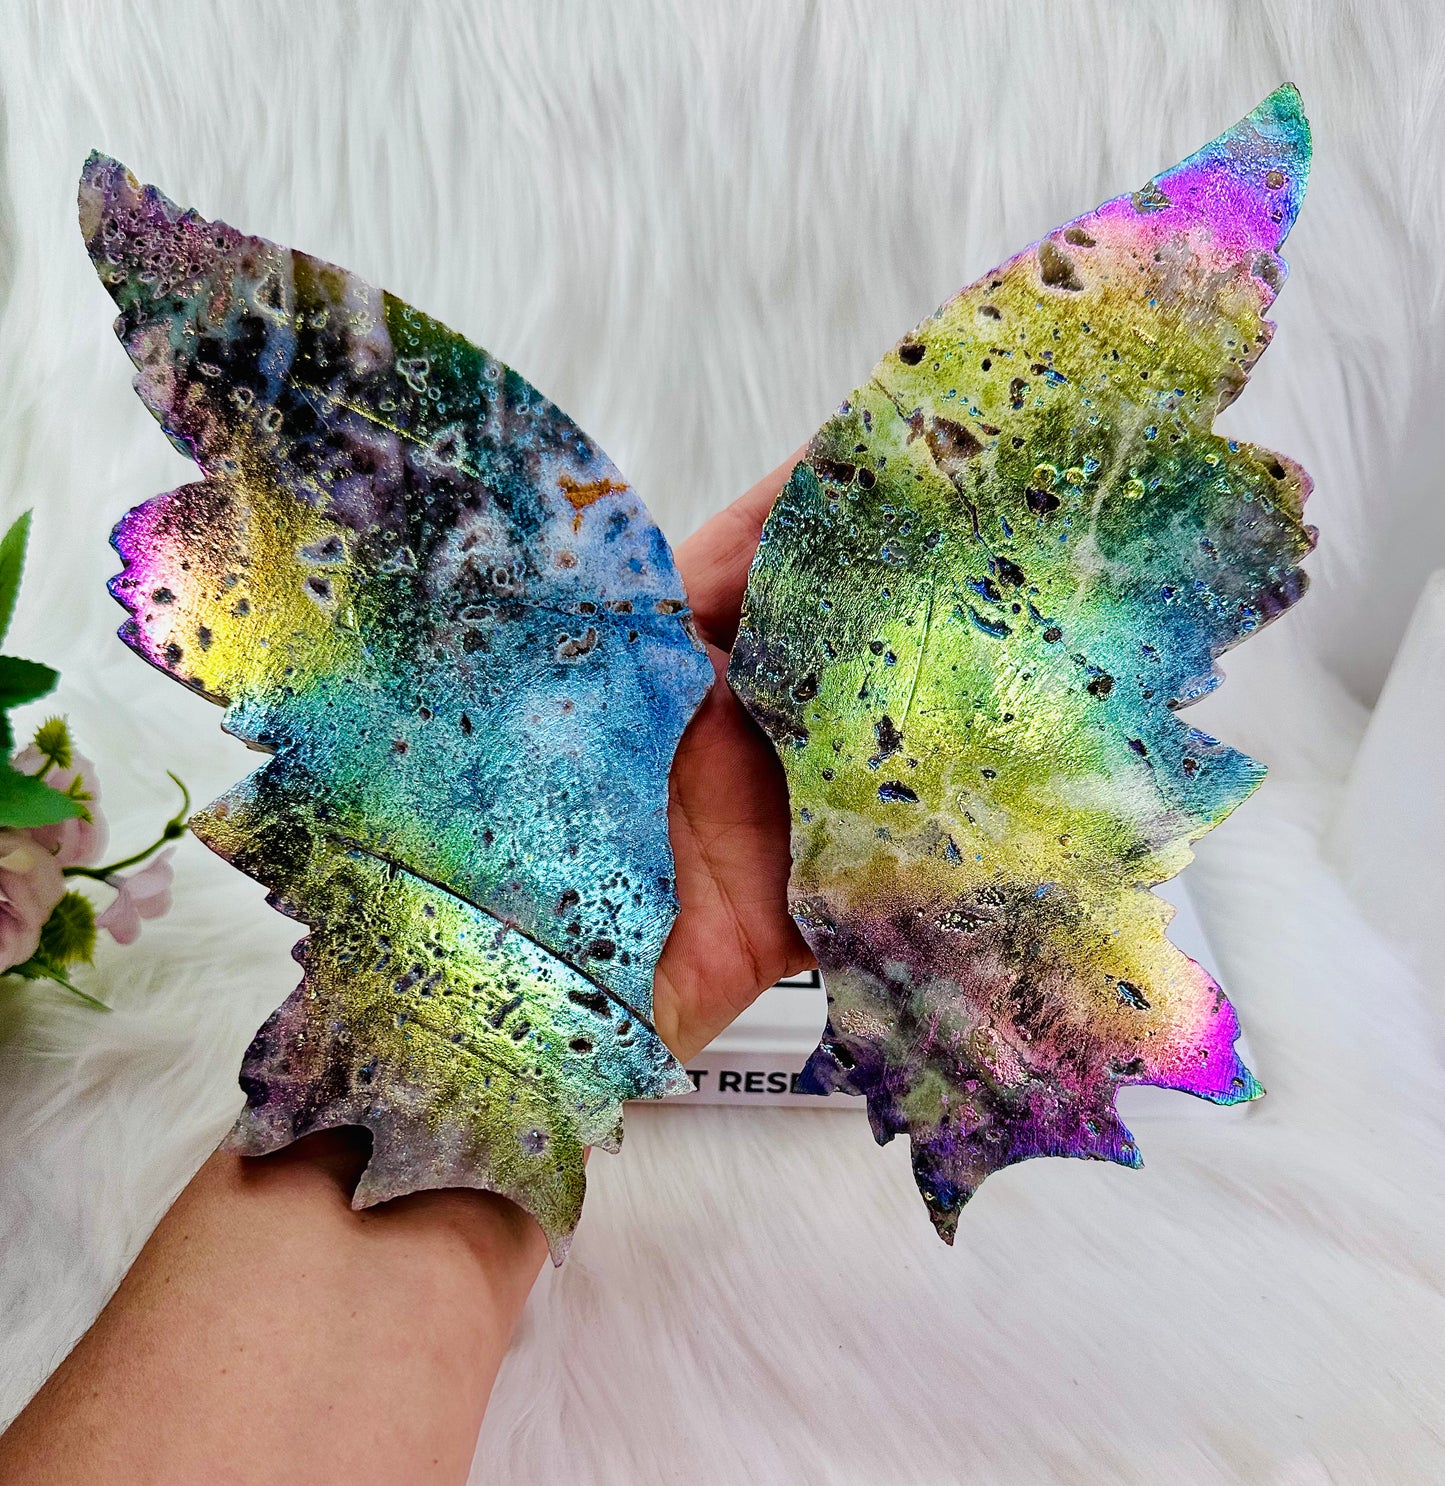 Classy & Fabulous True Statement Piece! Aura Druzy Sphalerite Huge Butterfly Wings ~ 26cm Tall & 36cm Wide (On Stand)